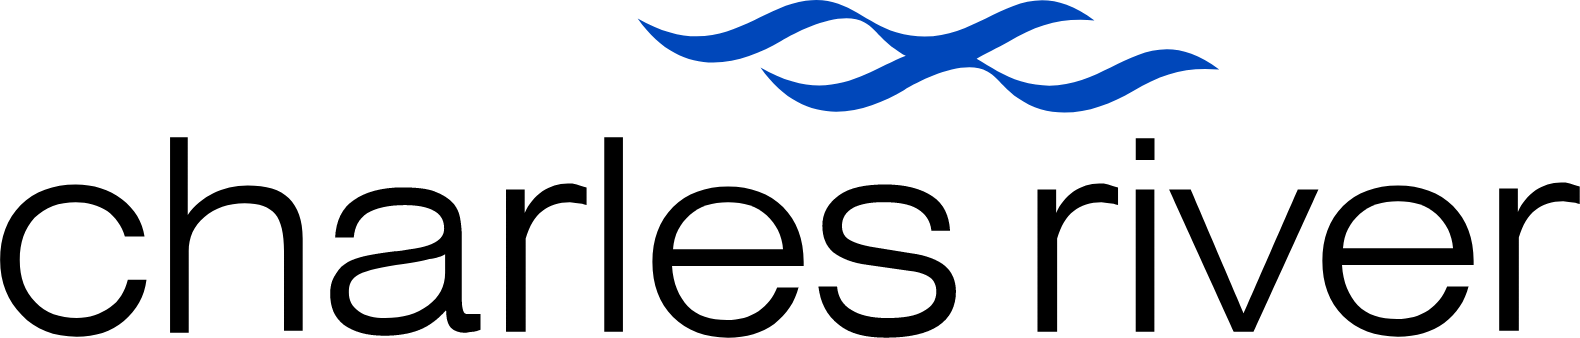 Charles River Laboratories
 logo large (transparent PNG)